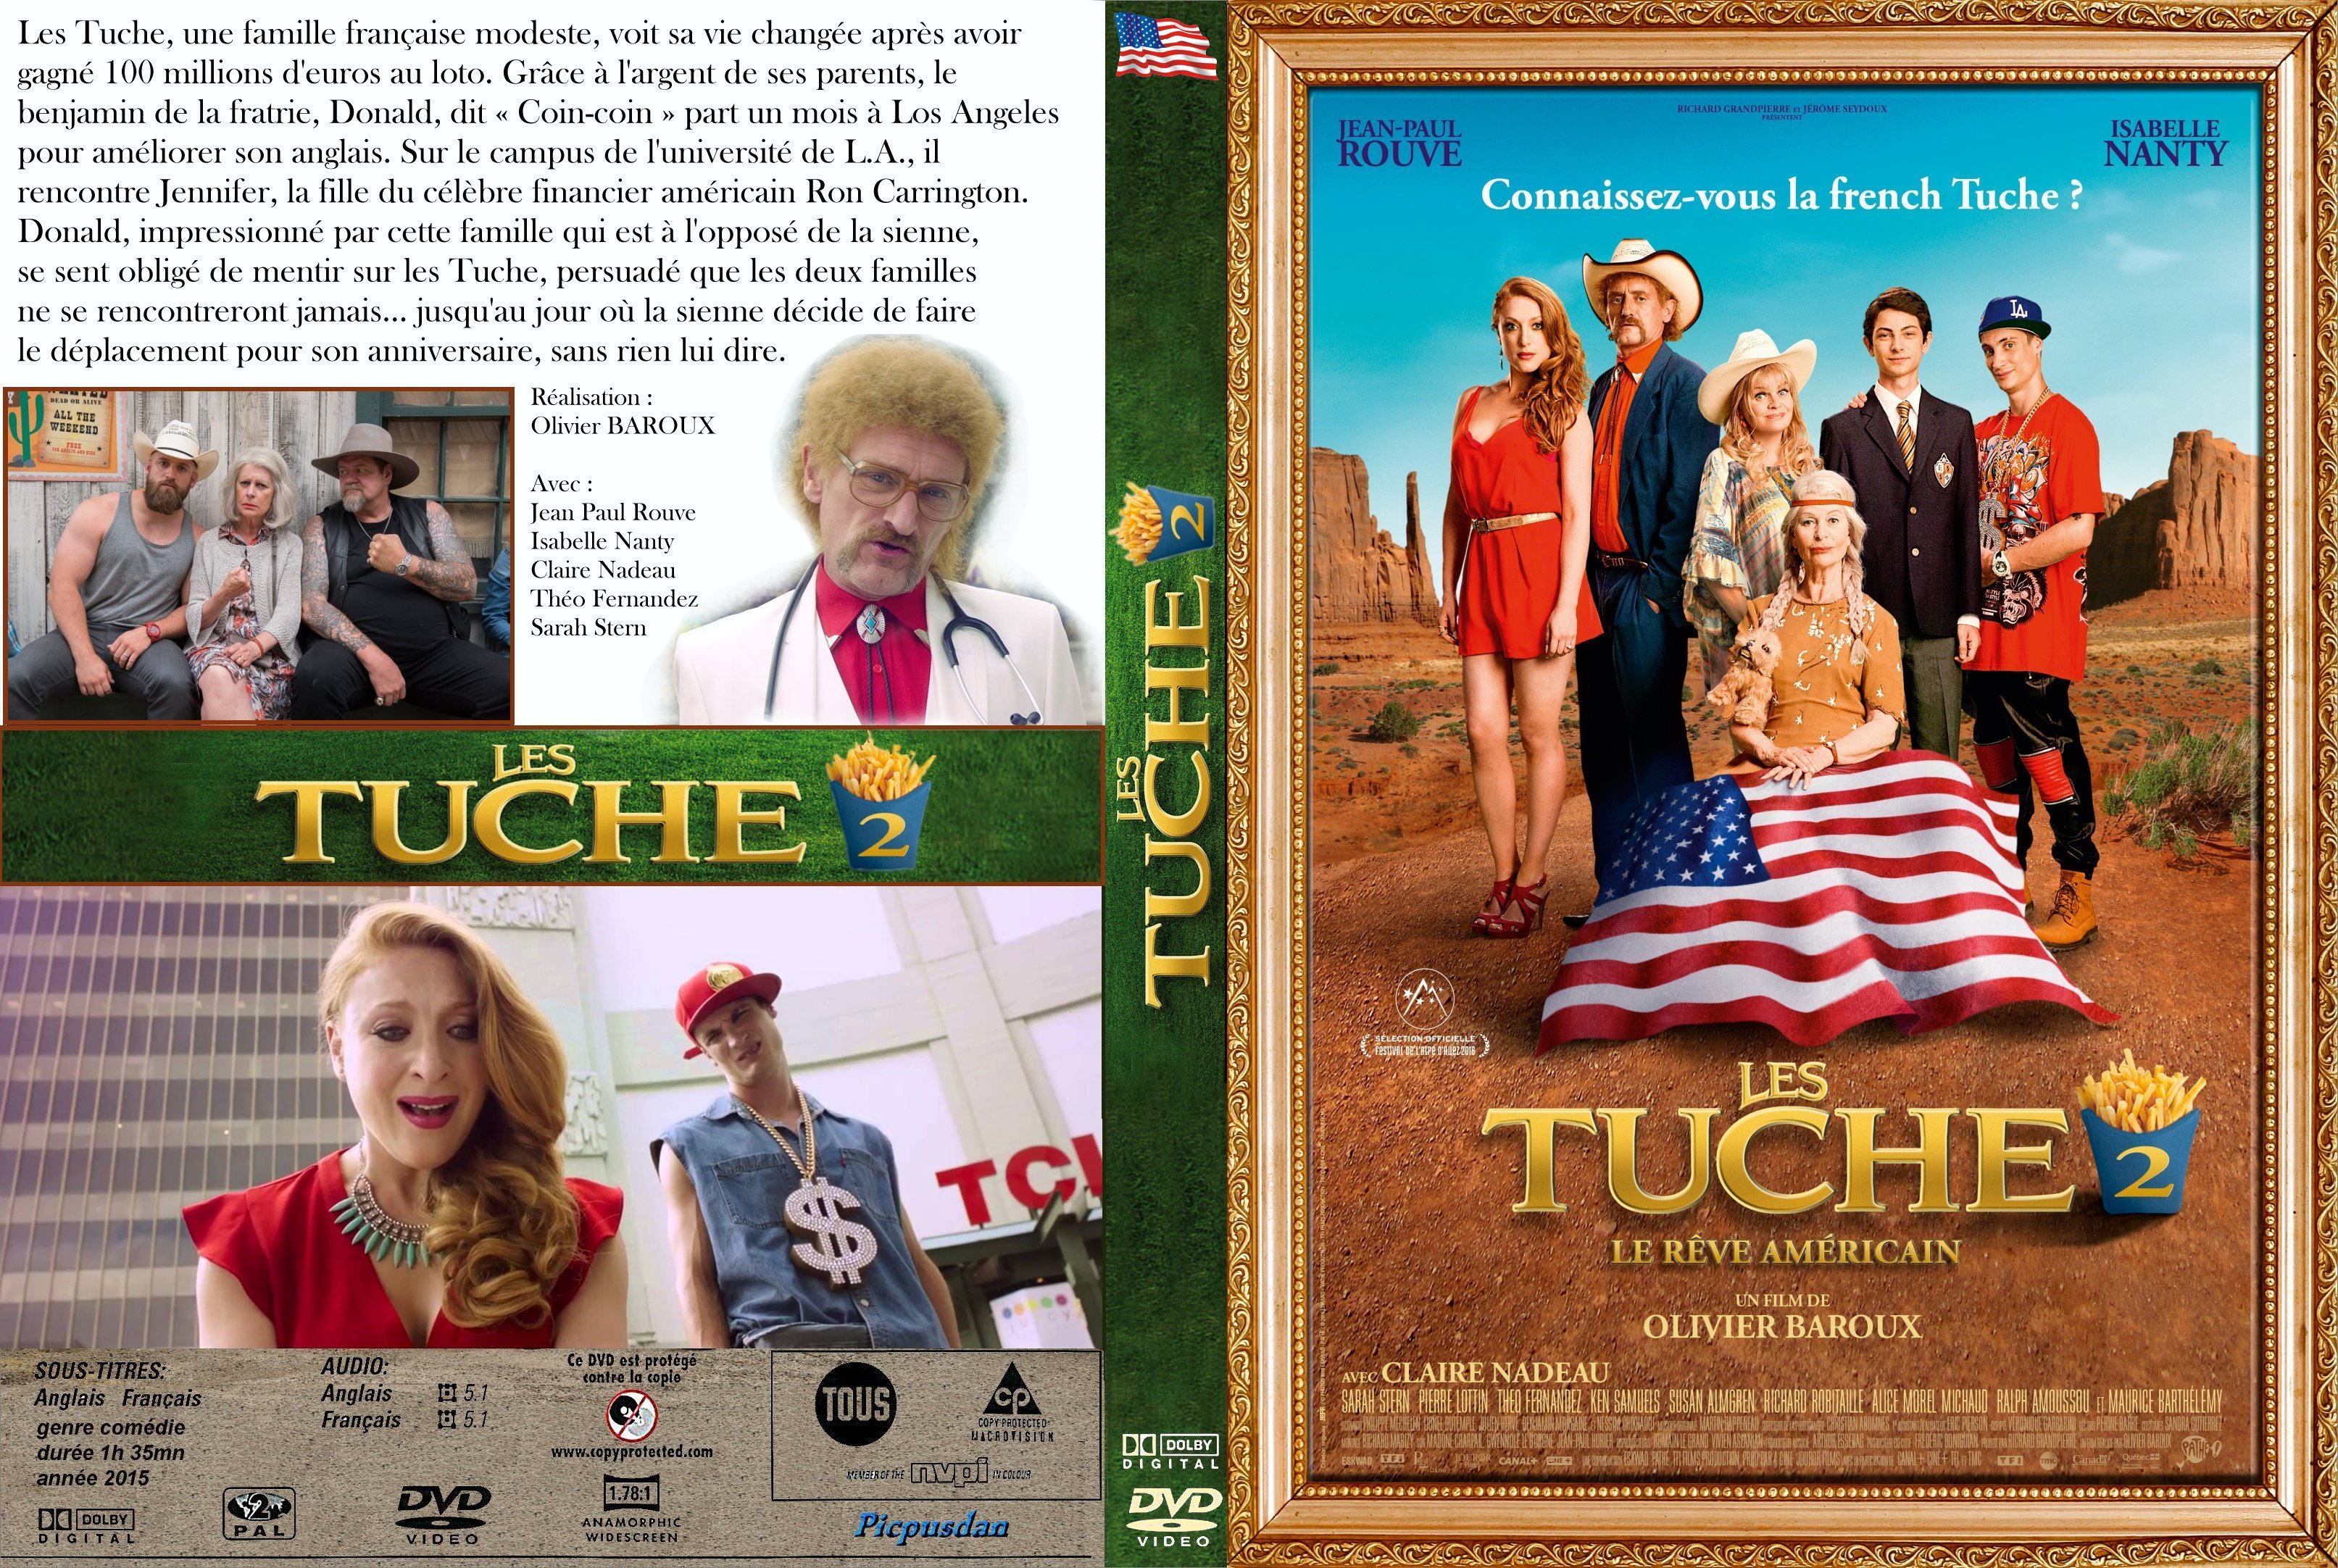 Jaquette DVD Les Tuche 2 custom